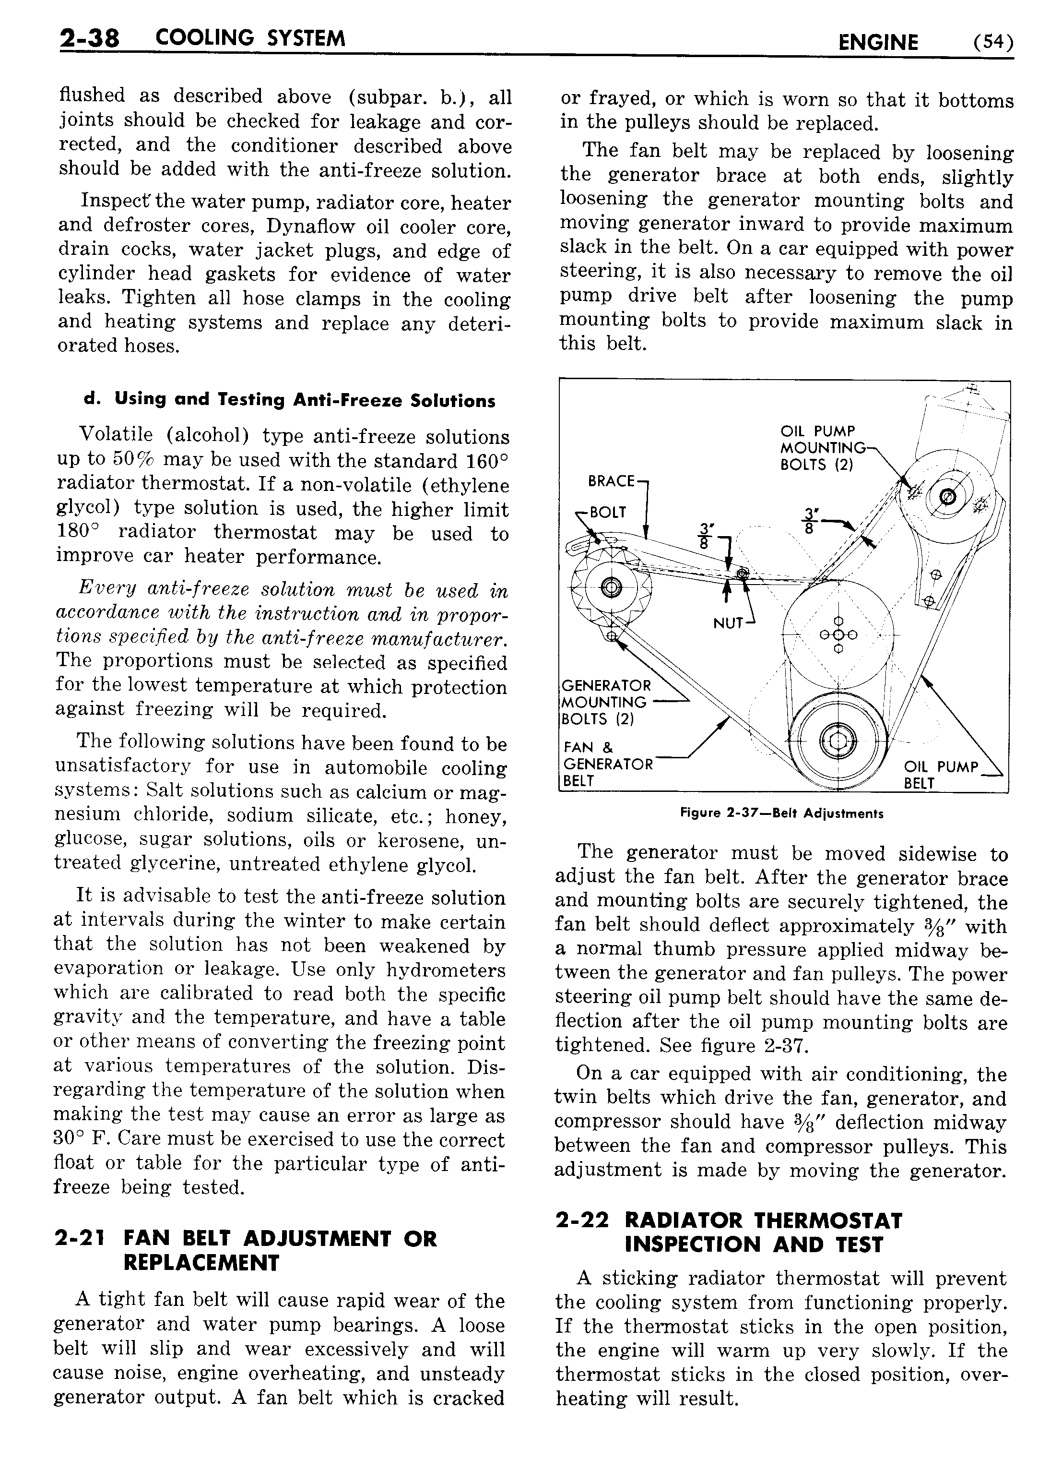 n_03 1954 Buick Shop Manual - Engine-038-038.jpg